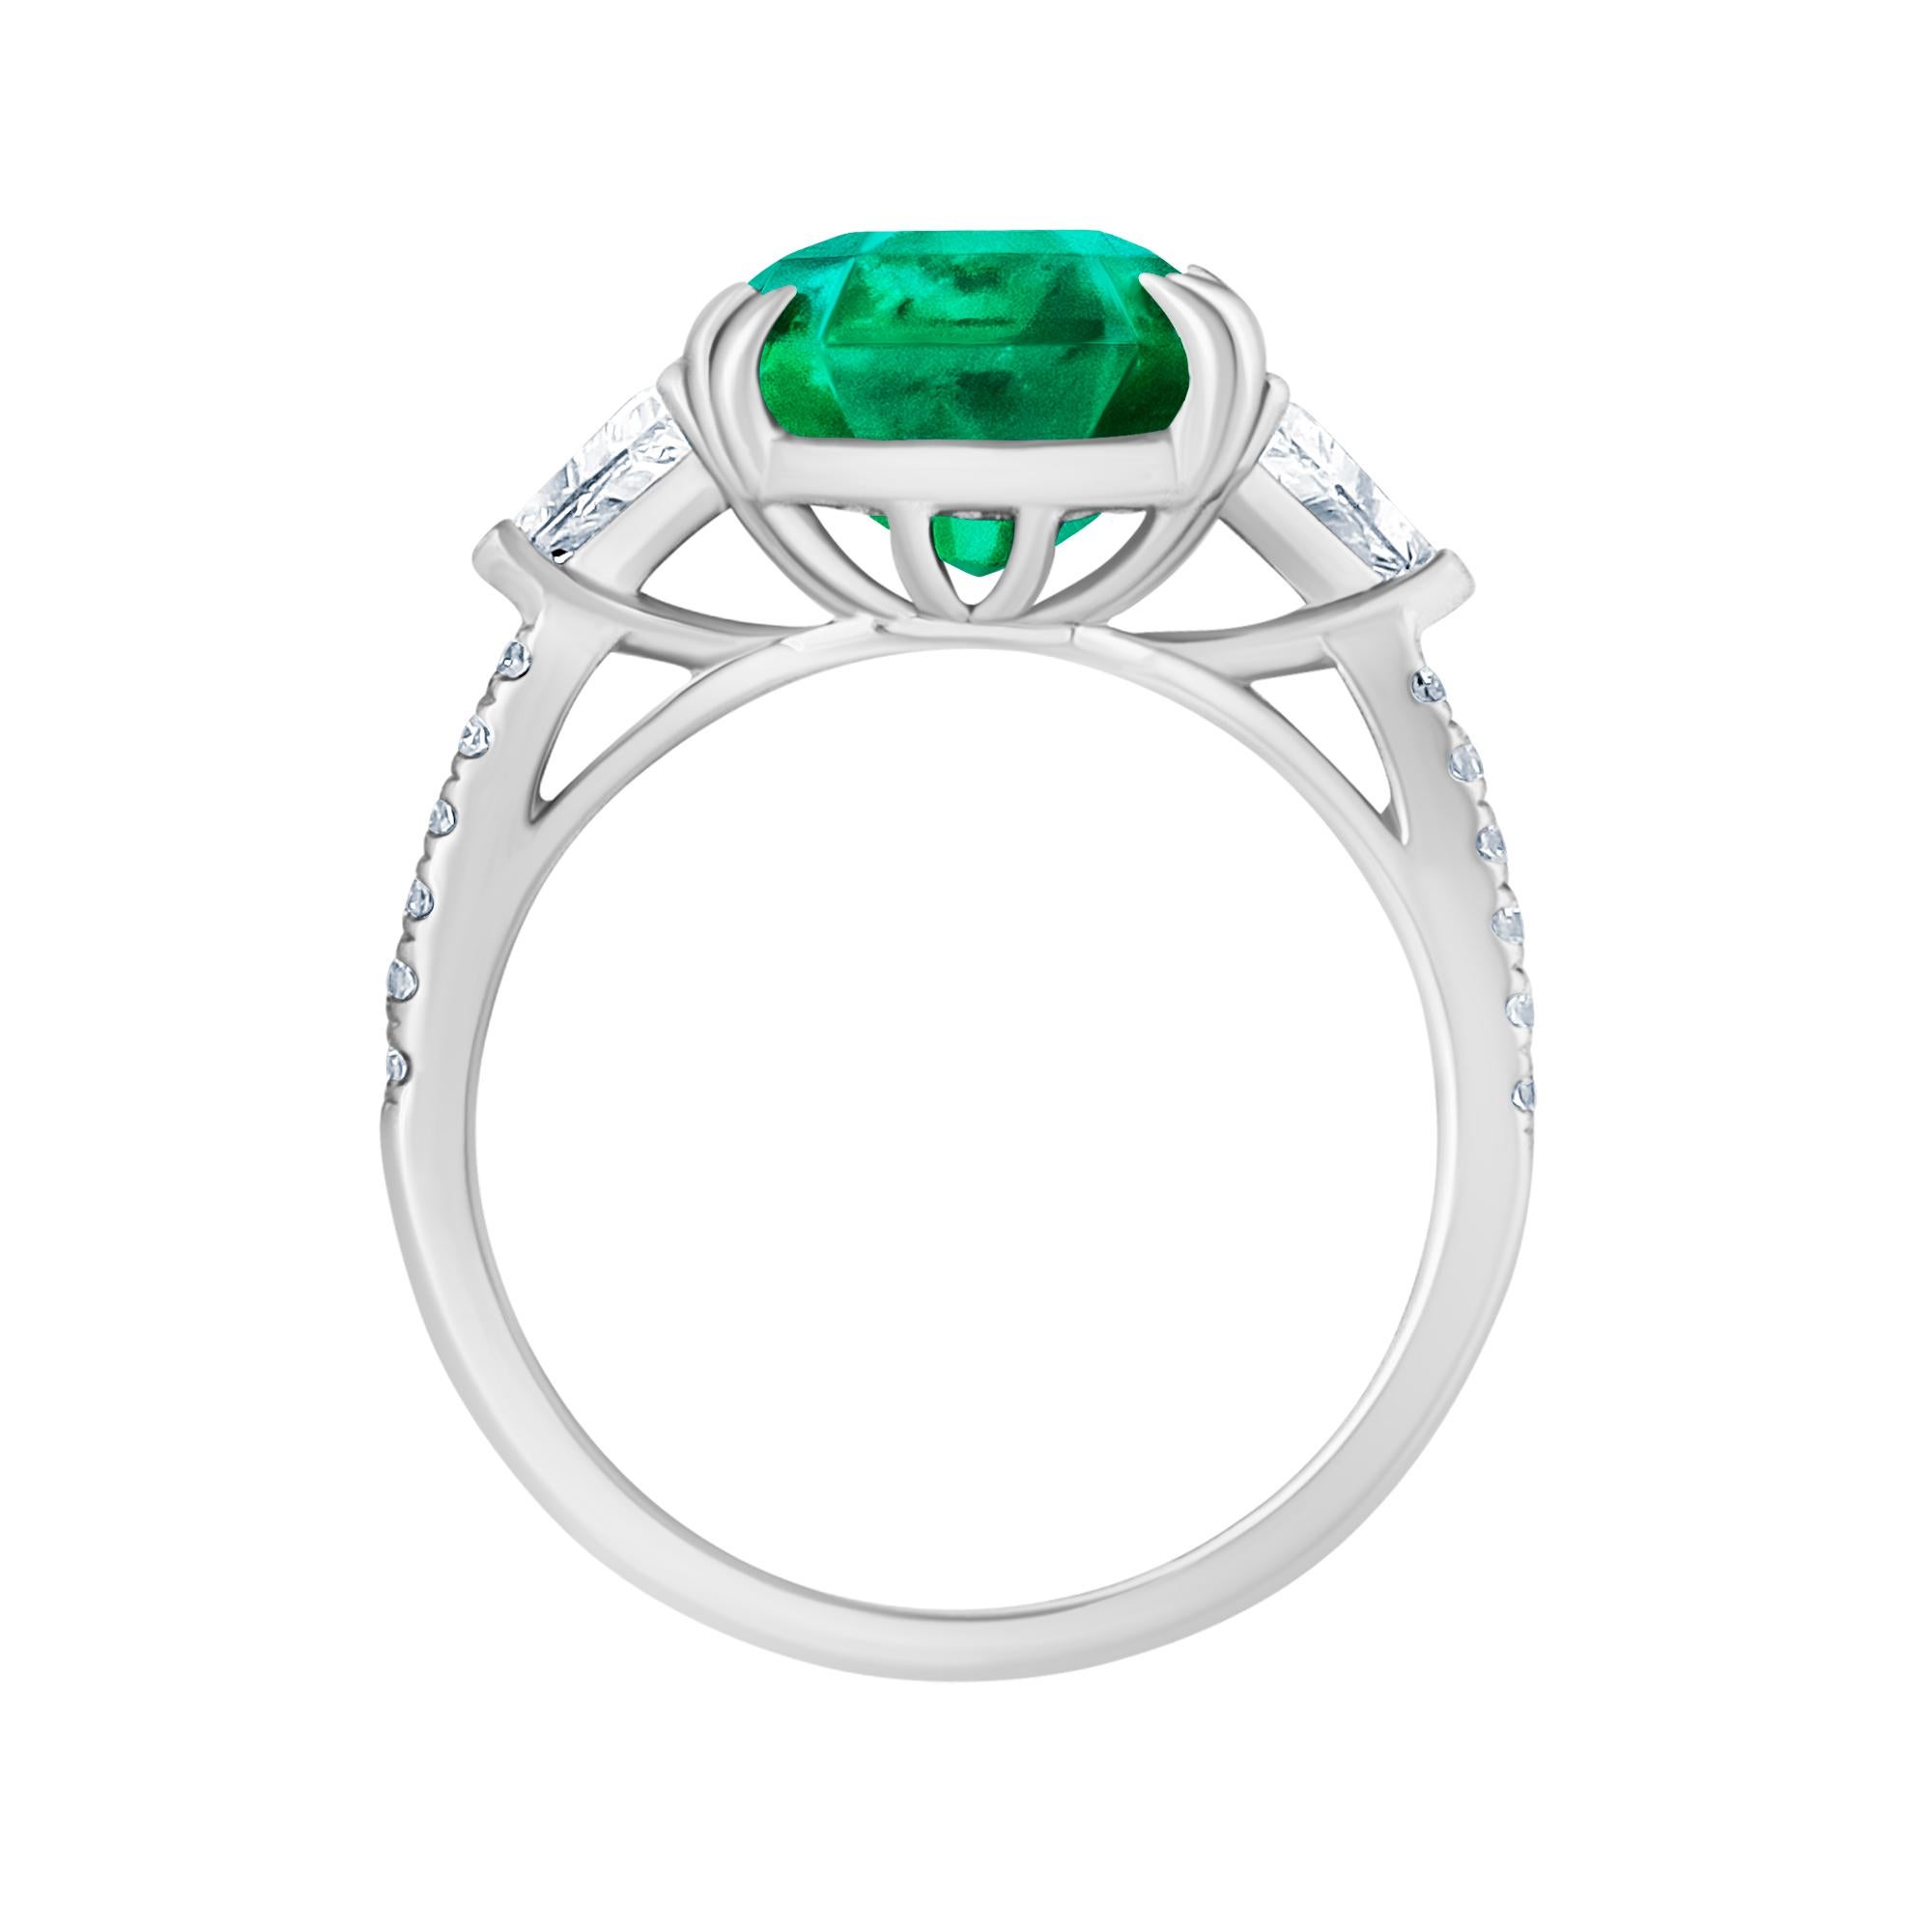 Contemporary Emilio Jewelry Certified 6.33 Carat Genuine Colombian Emerald Diamond Ring